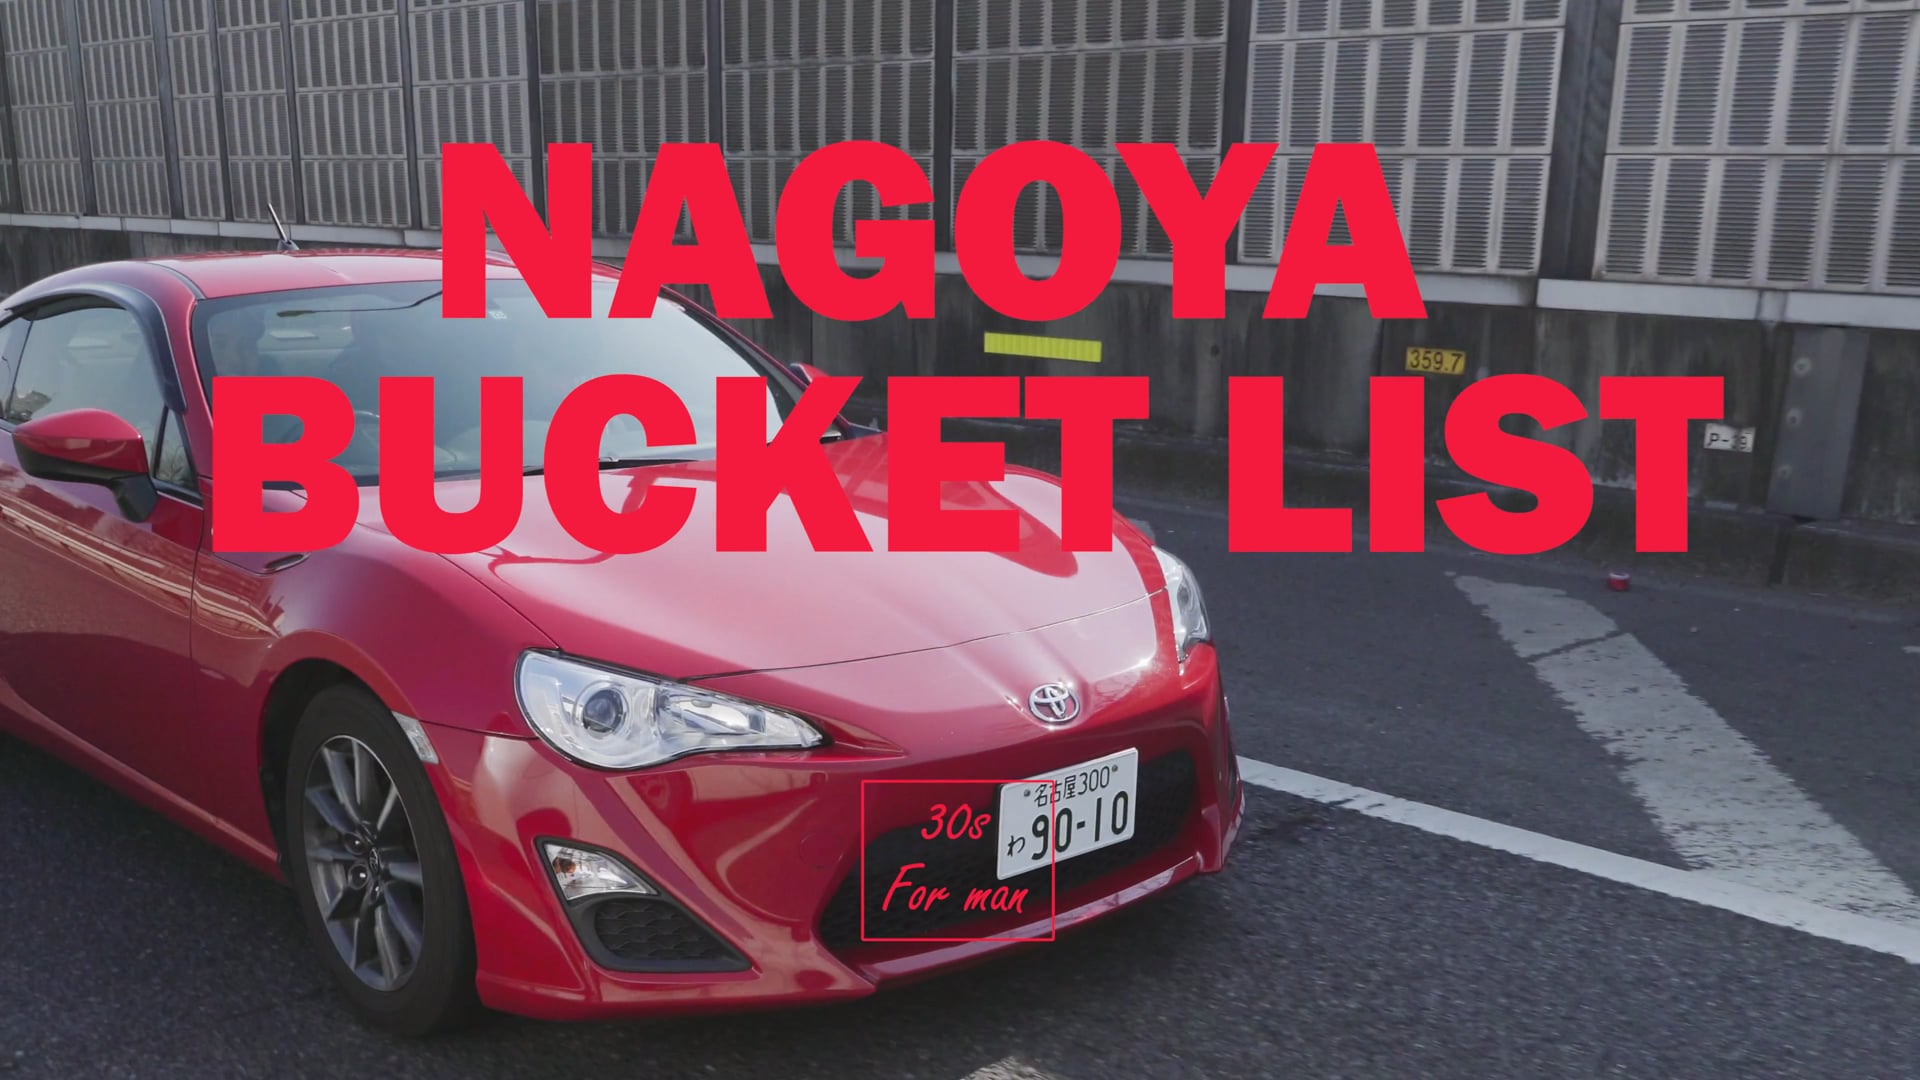 nagoya_bucket list_man_4k